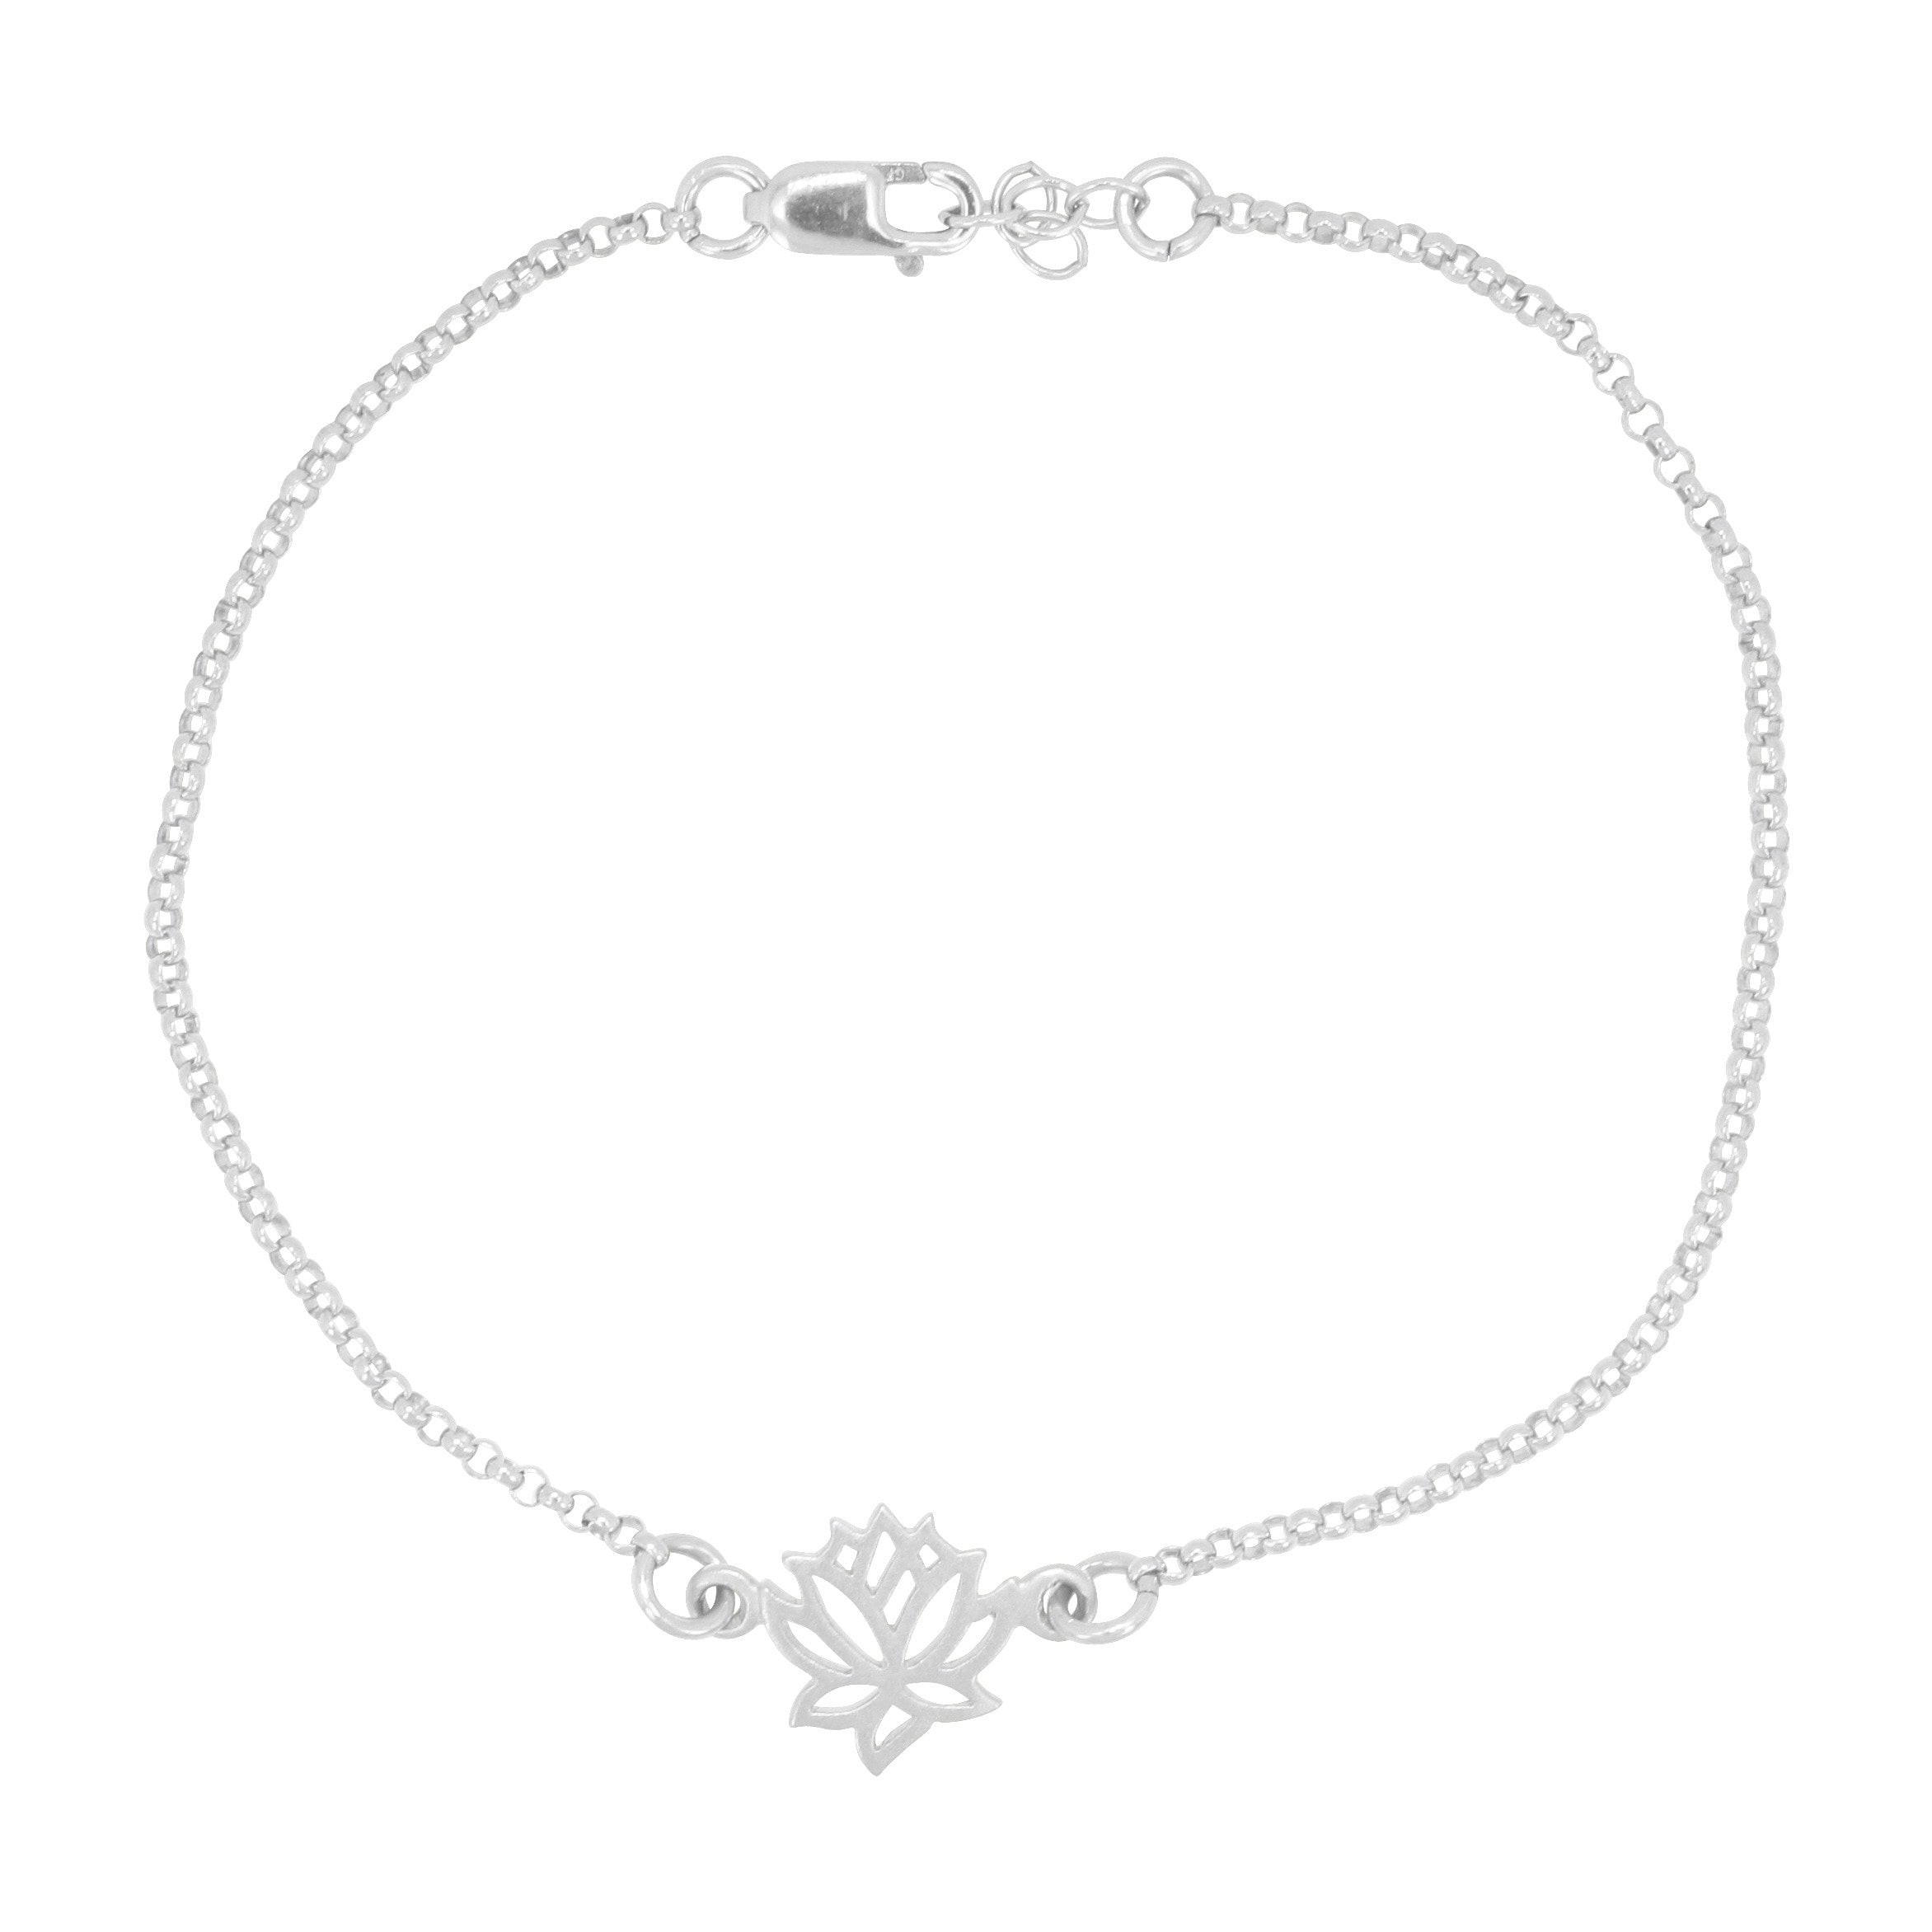 Dangling Silvertone White Mother of Pearl Lotus Petals Ankle Bracelet Anklet